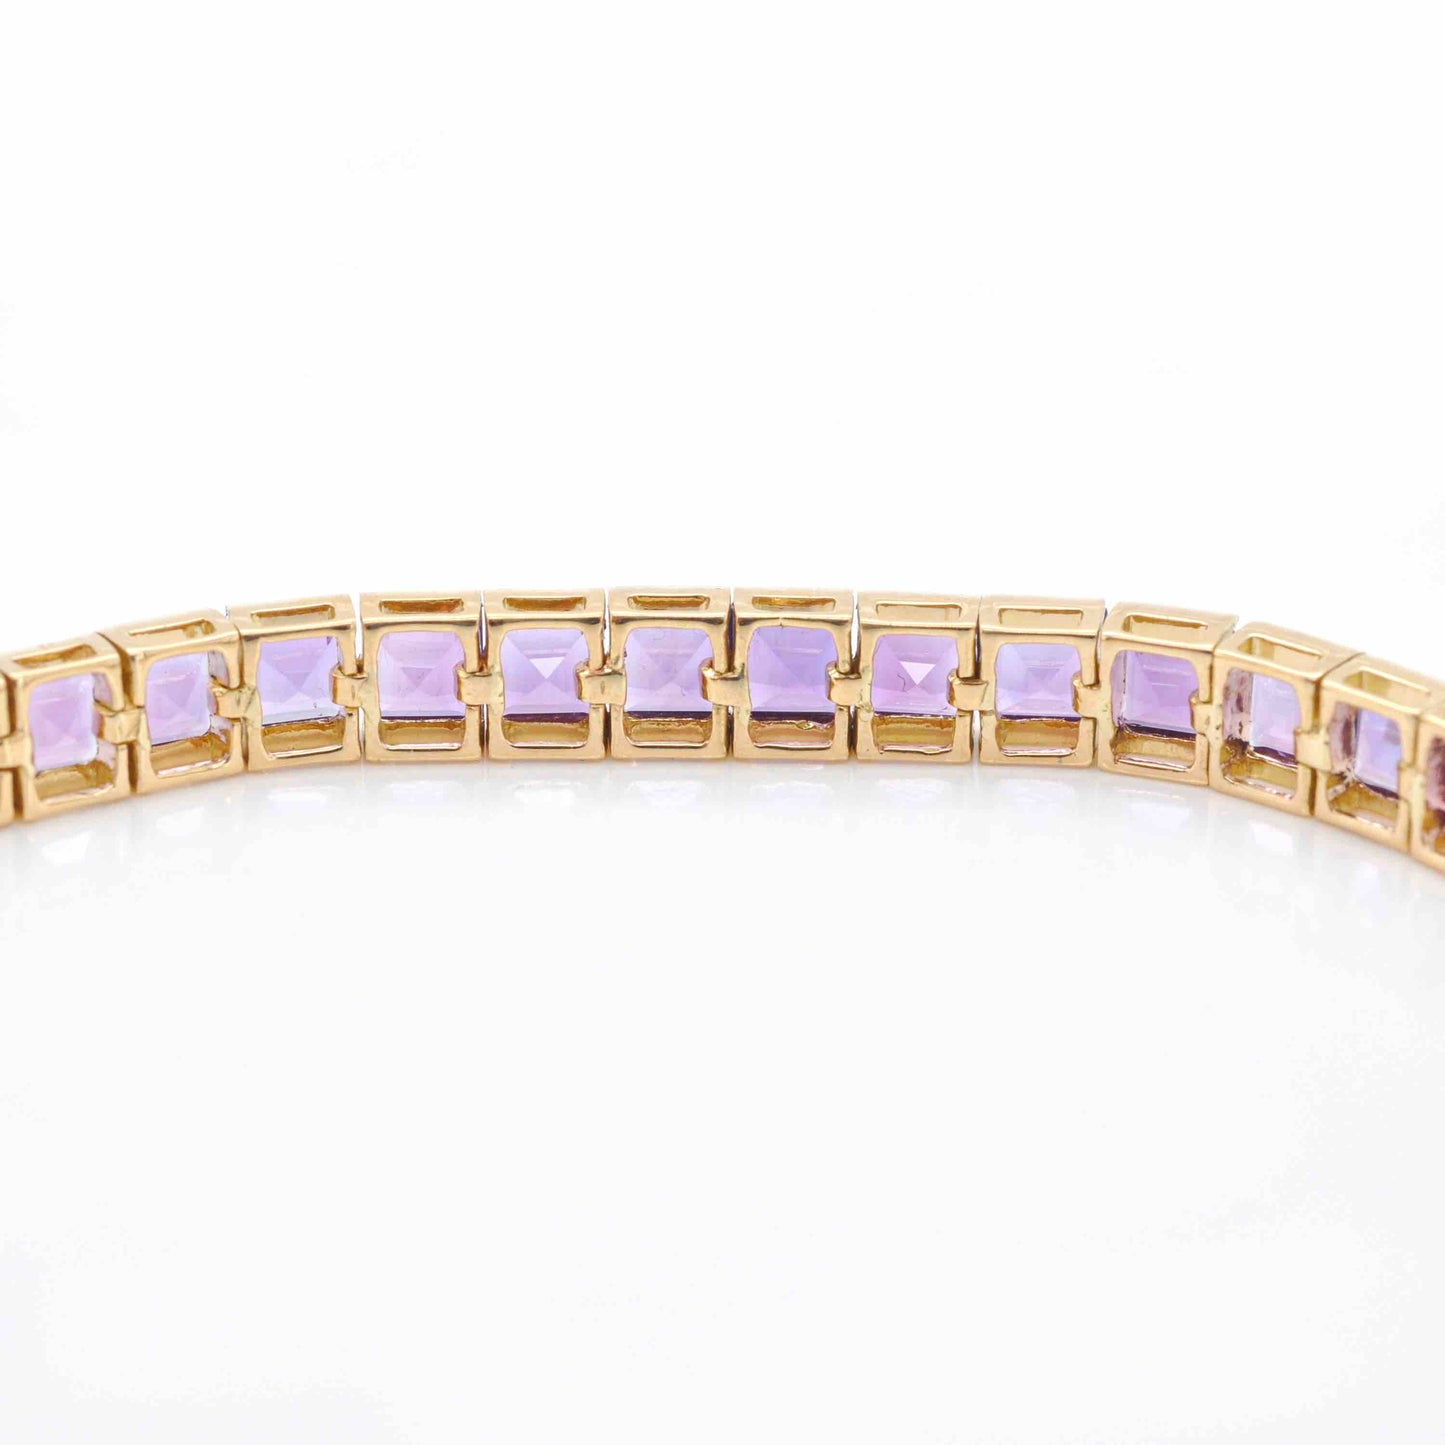 18K Gold Amethyst Art Deco Tennis Line Bracelet - Vaibhav Dhadda Jewelry